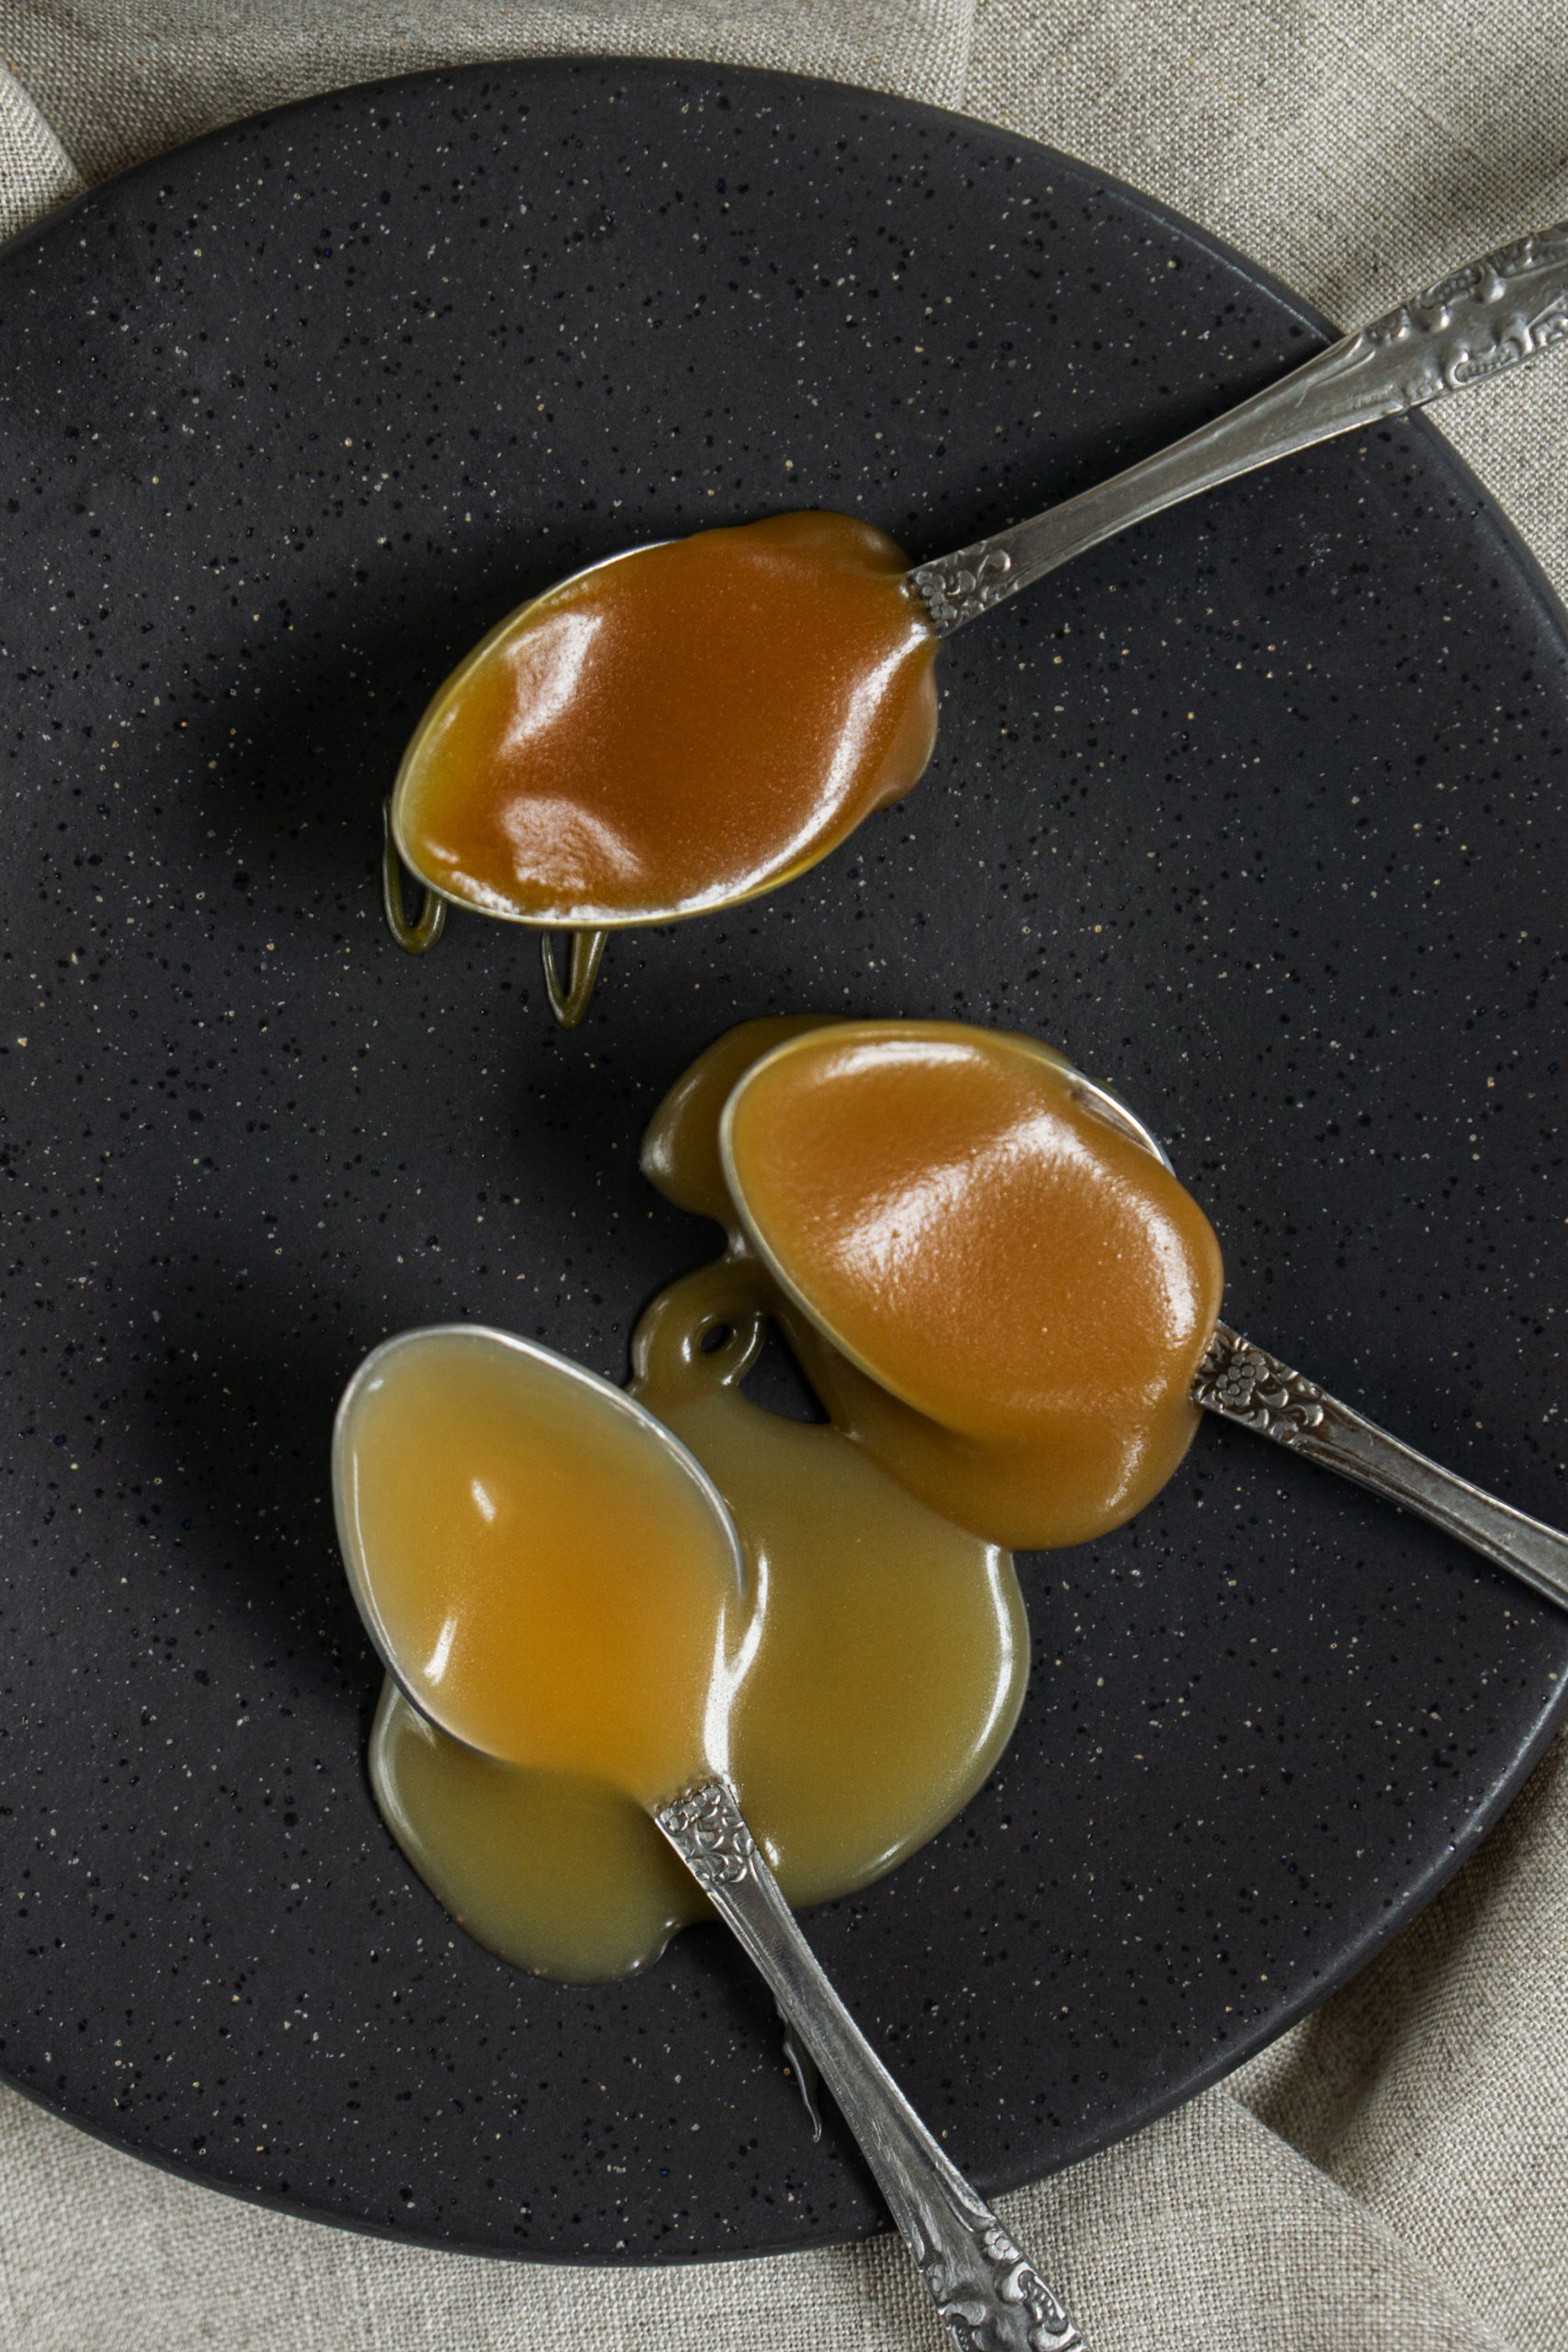 3 teaspoons of wet method caramel